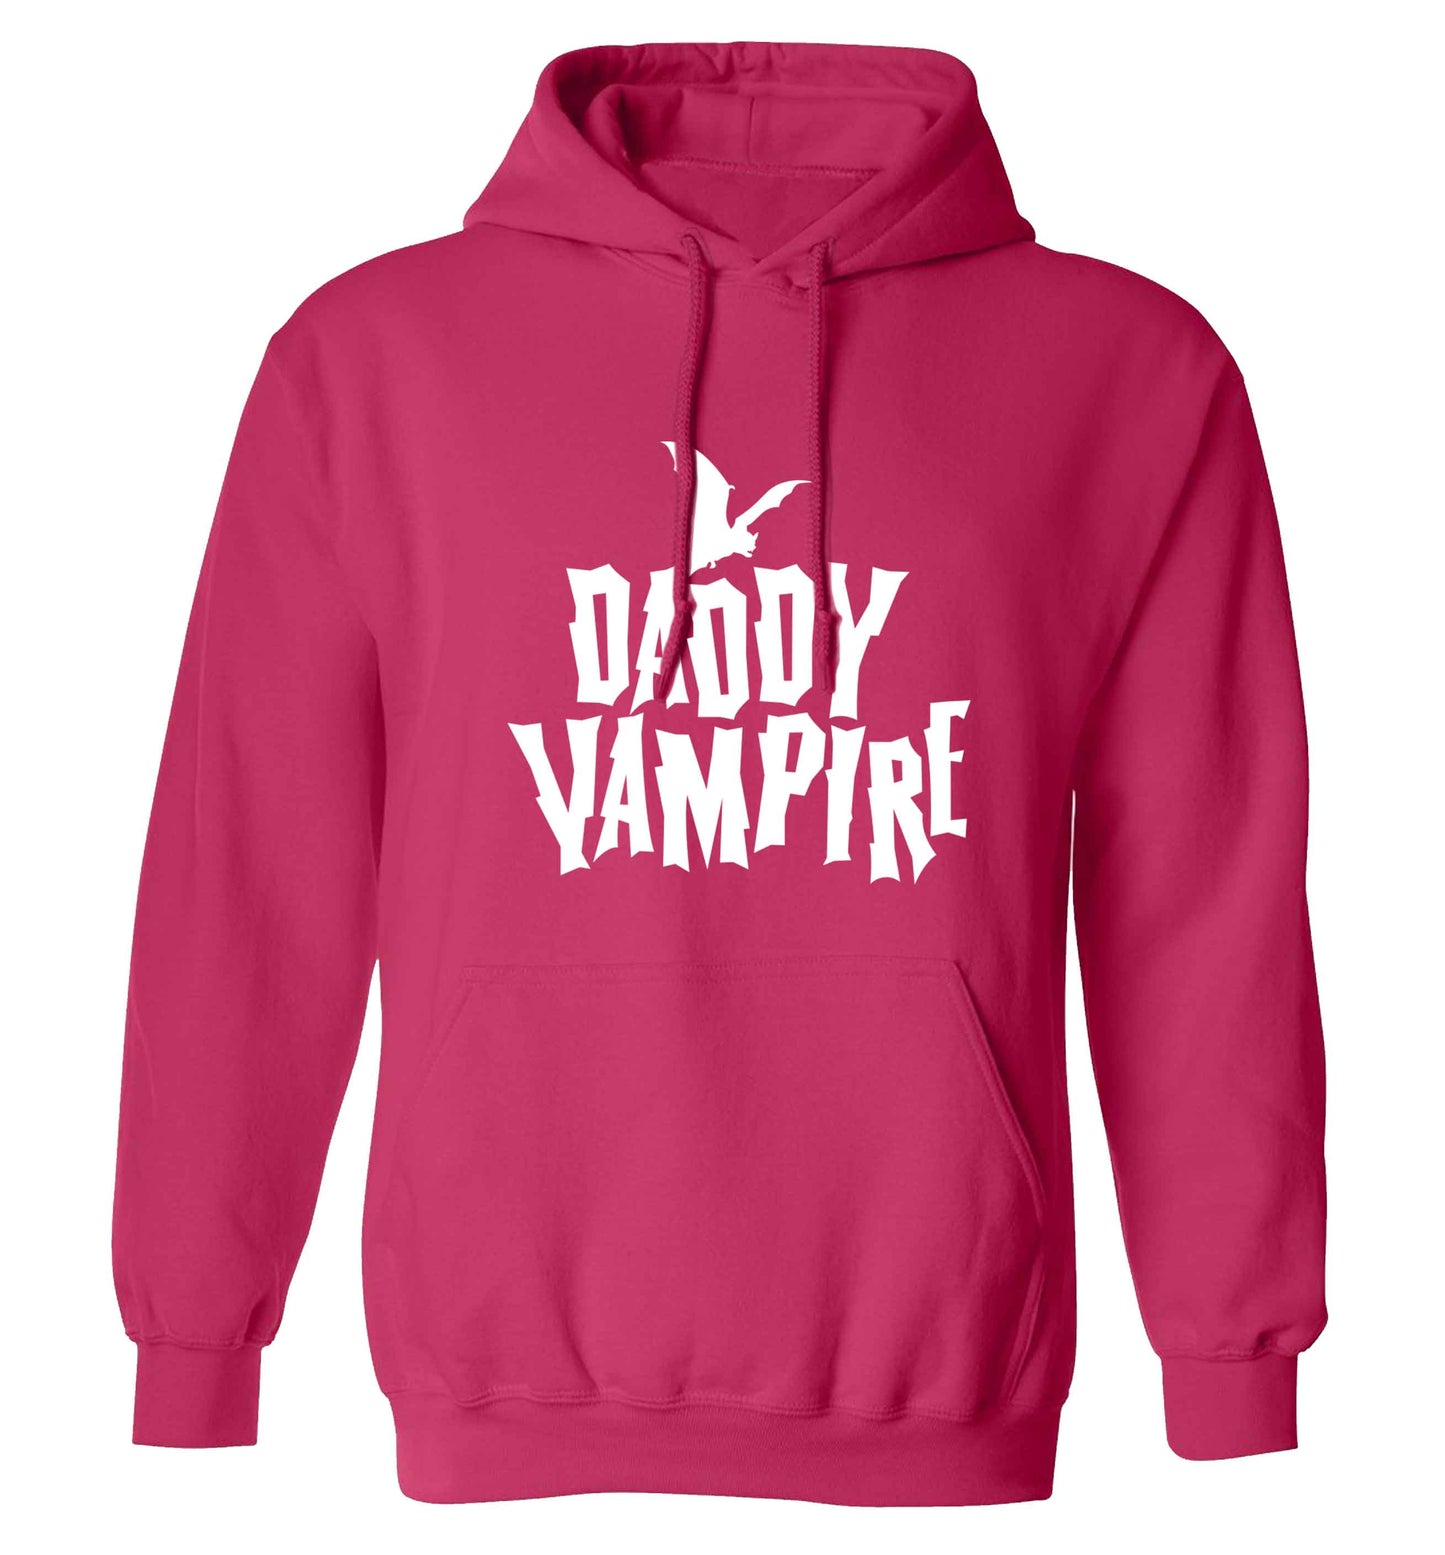 Daddy vampire adults unisex pink hoodie 2XL